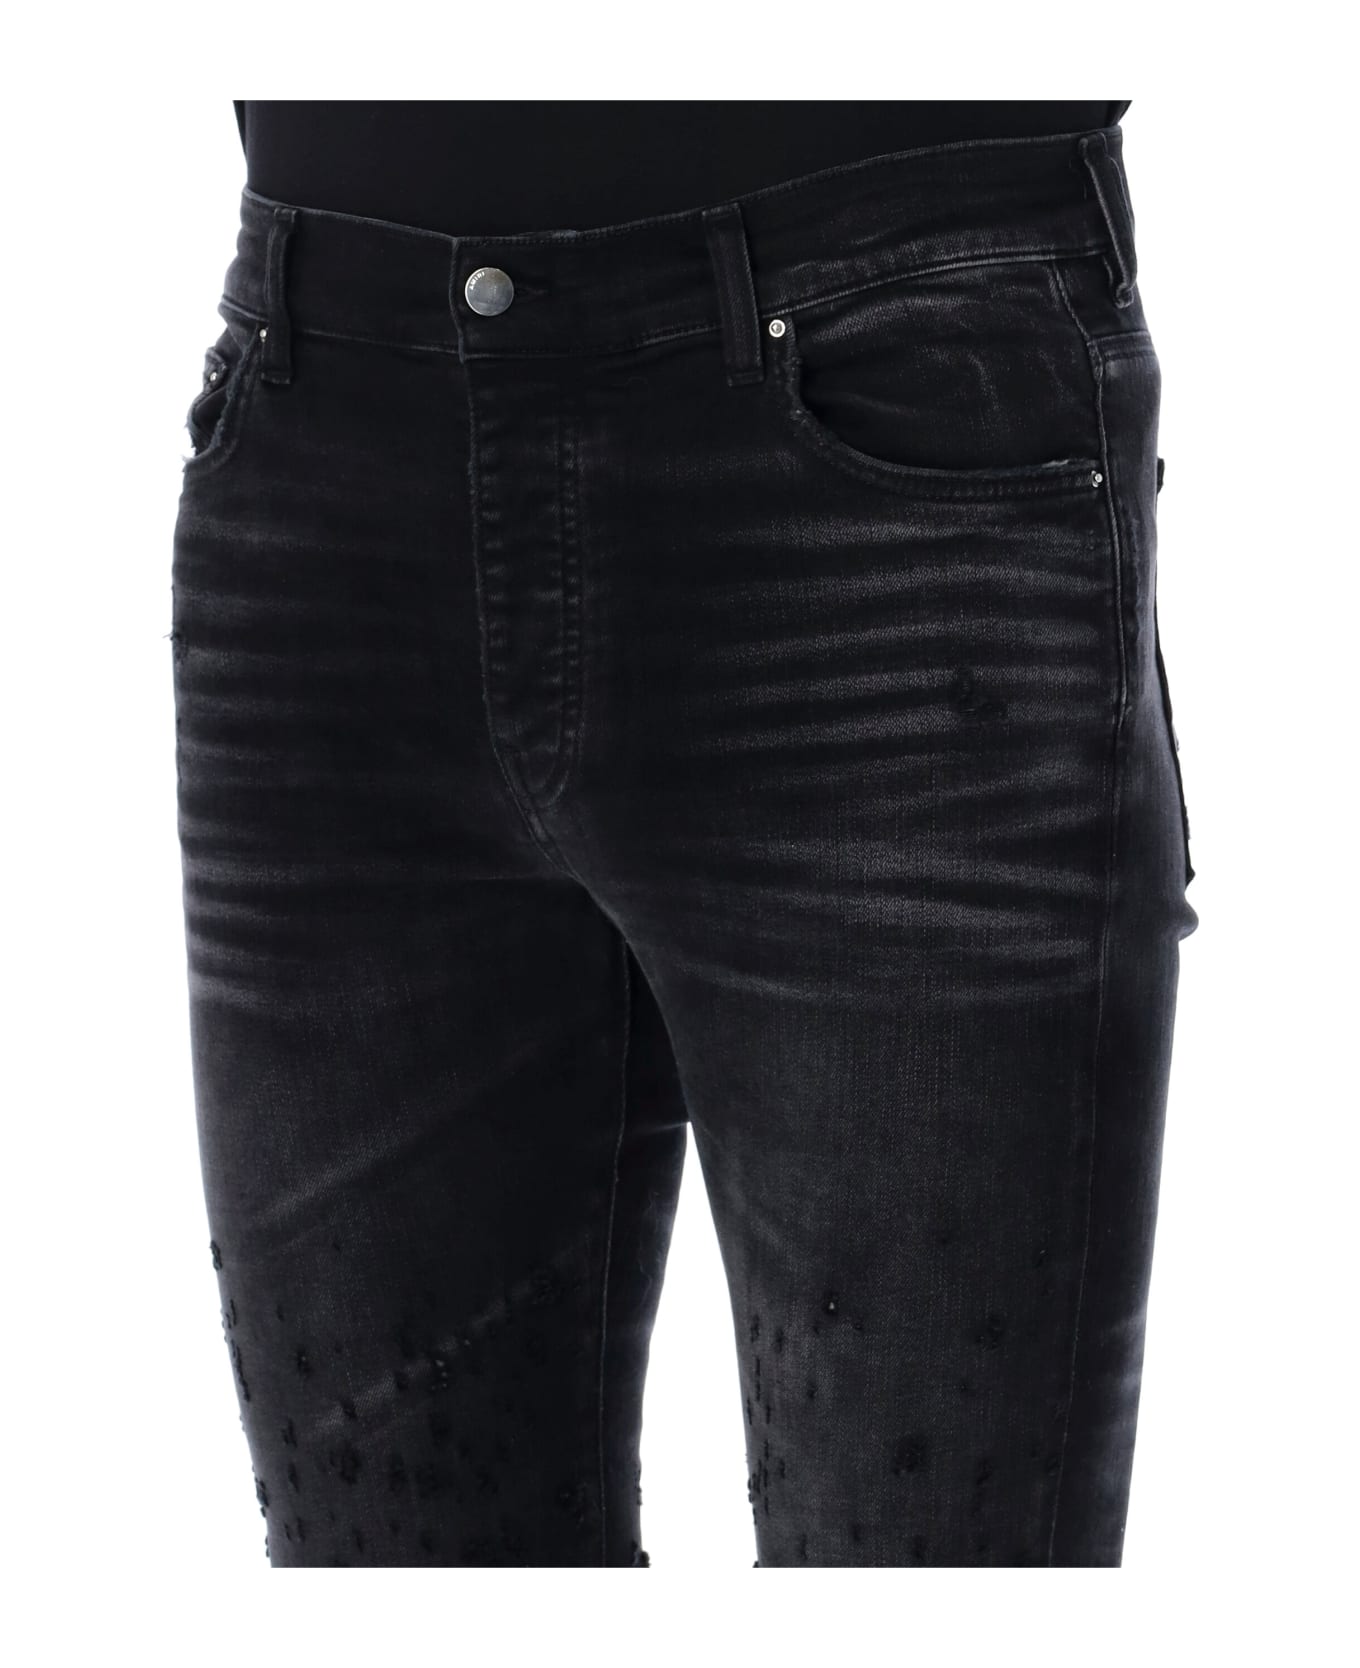 AMIRI Shotgun Skinny Jeans - FADED BLACK